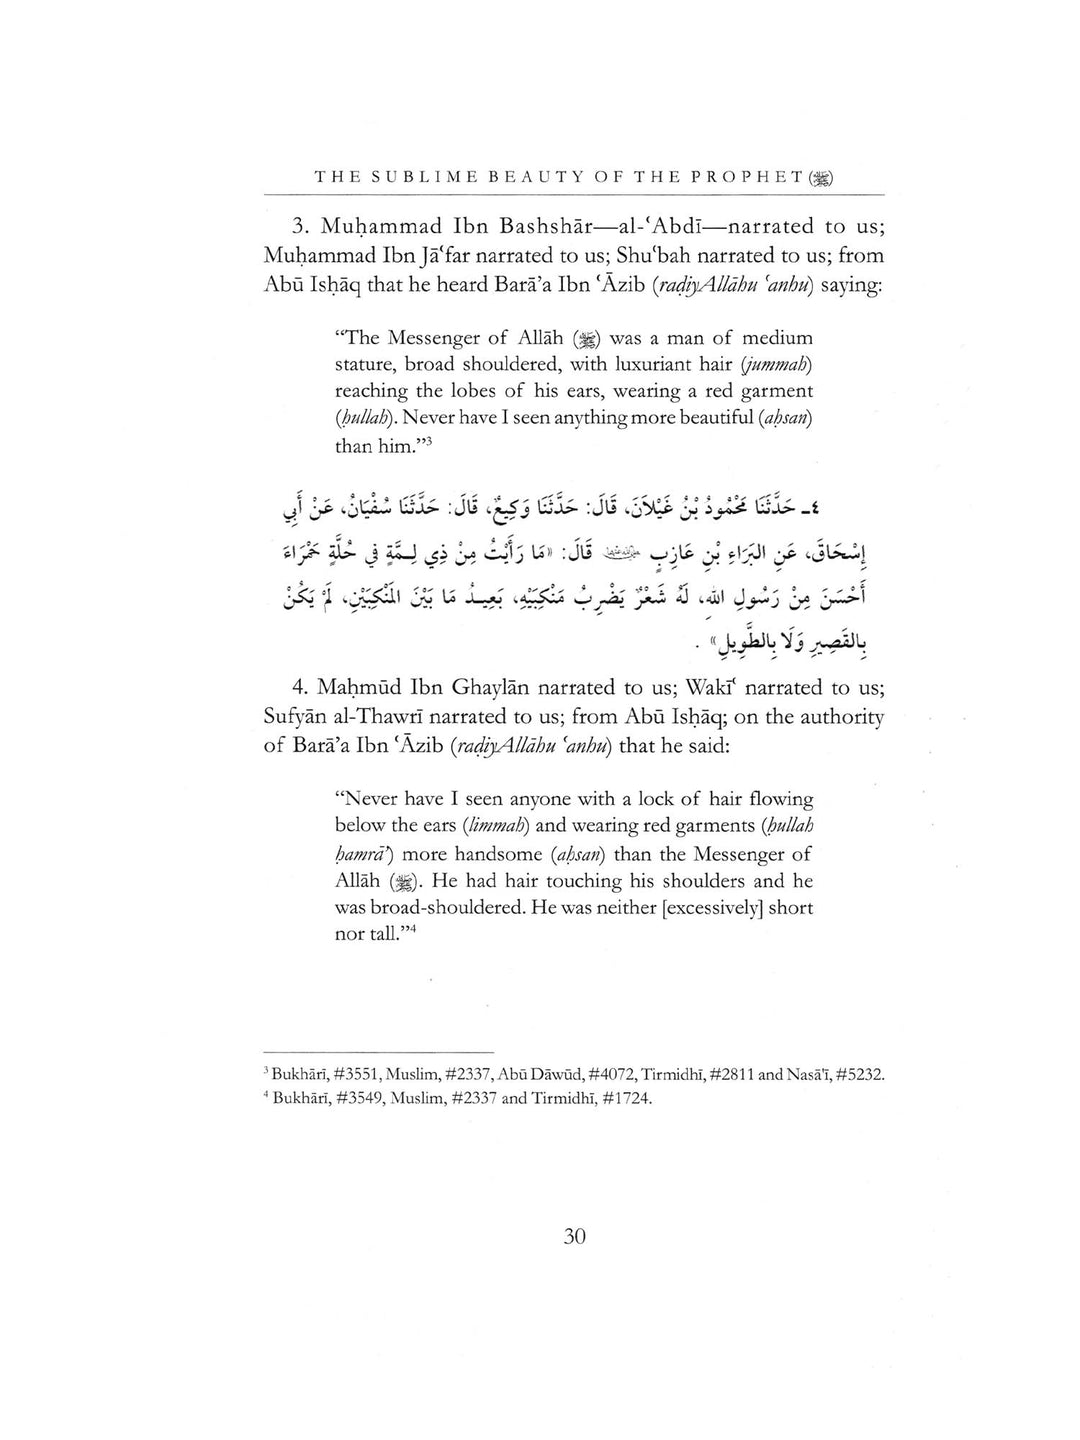 The Sublime Beauty of The Prophet (PBUH) - Al-Tirmidhi (Paperback)